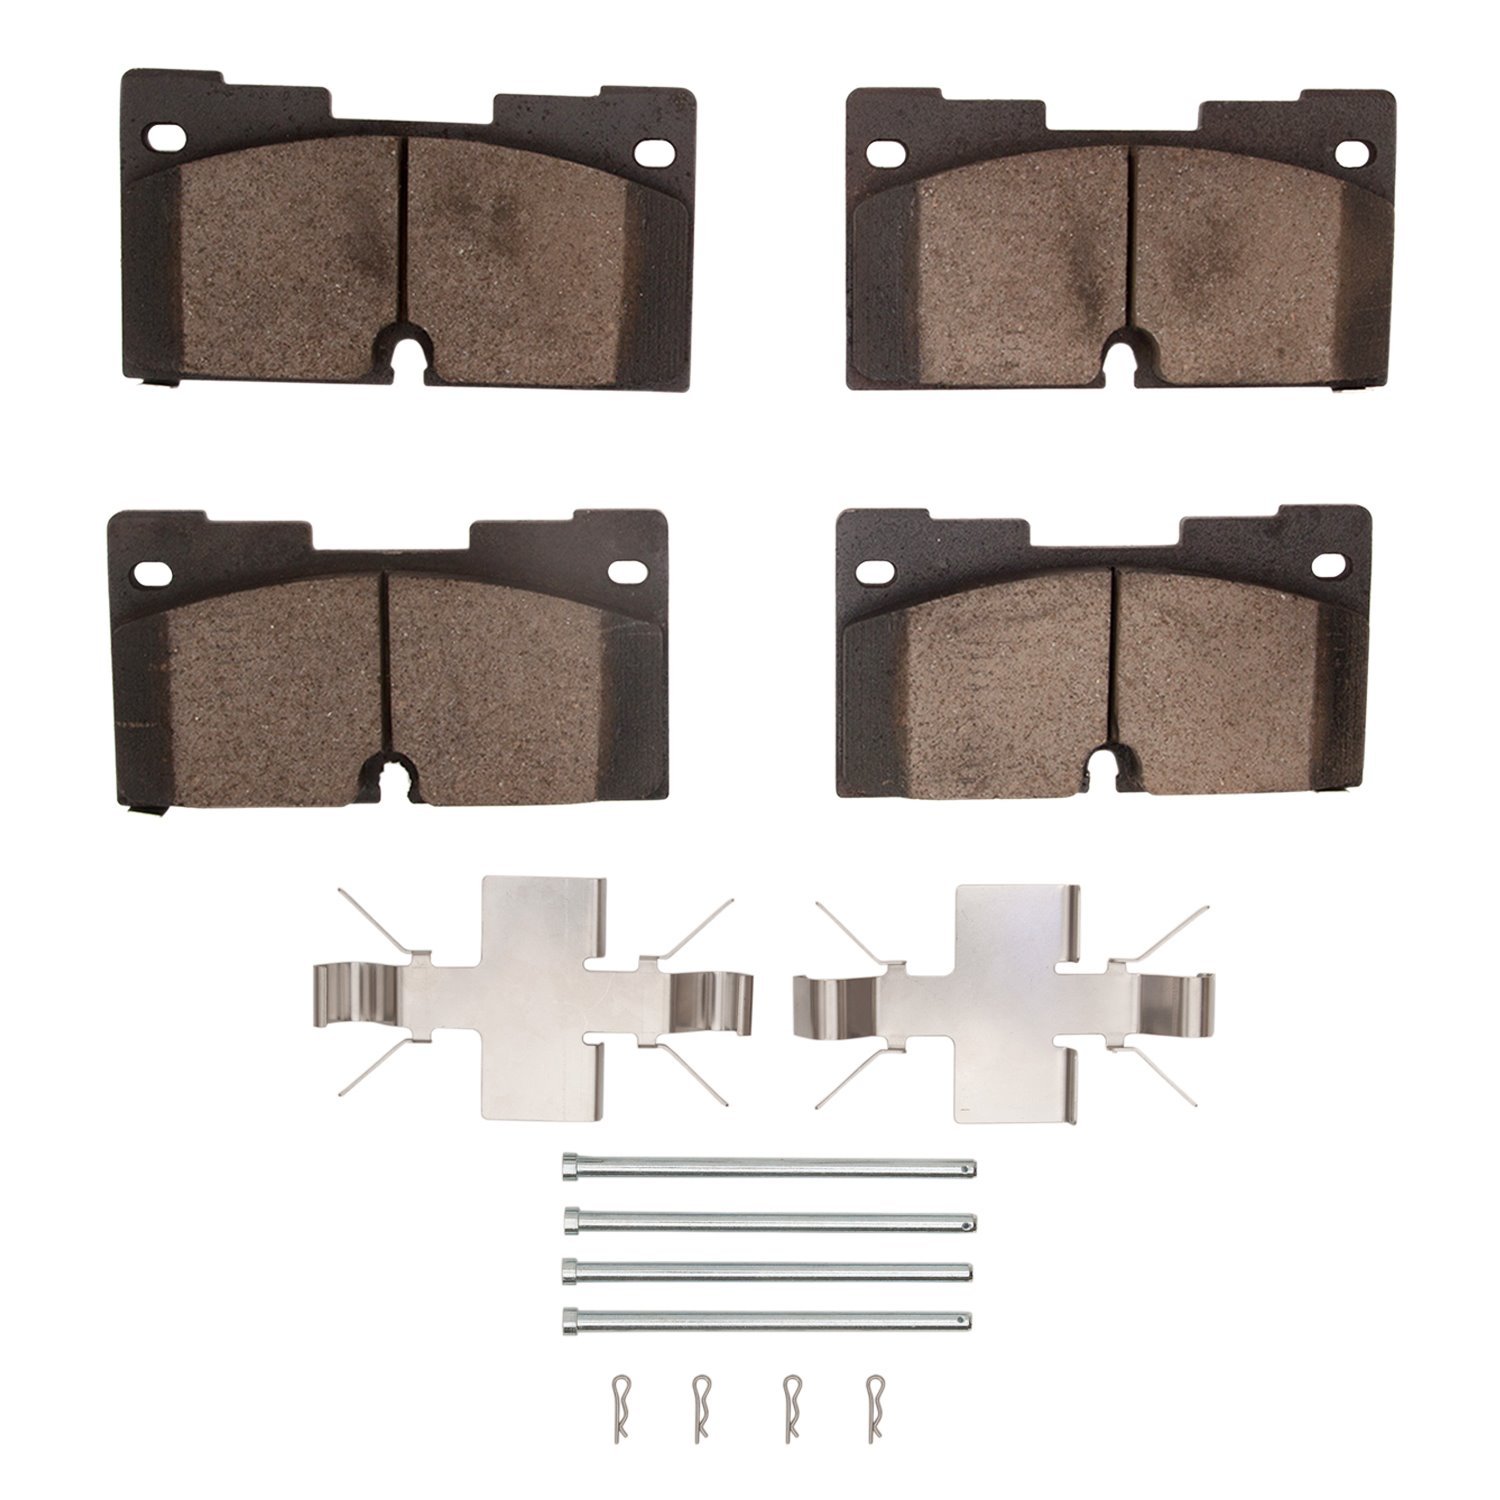 1310-2173-01 3000-Series Ceramic Brake Pads & Hardware Kit, Fits Select GM, Position: Front